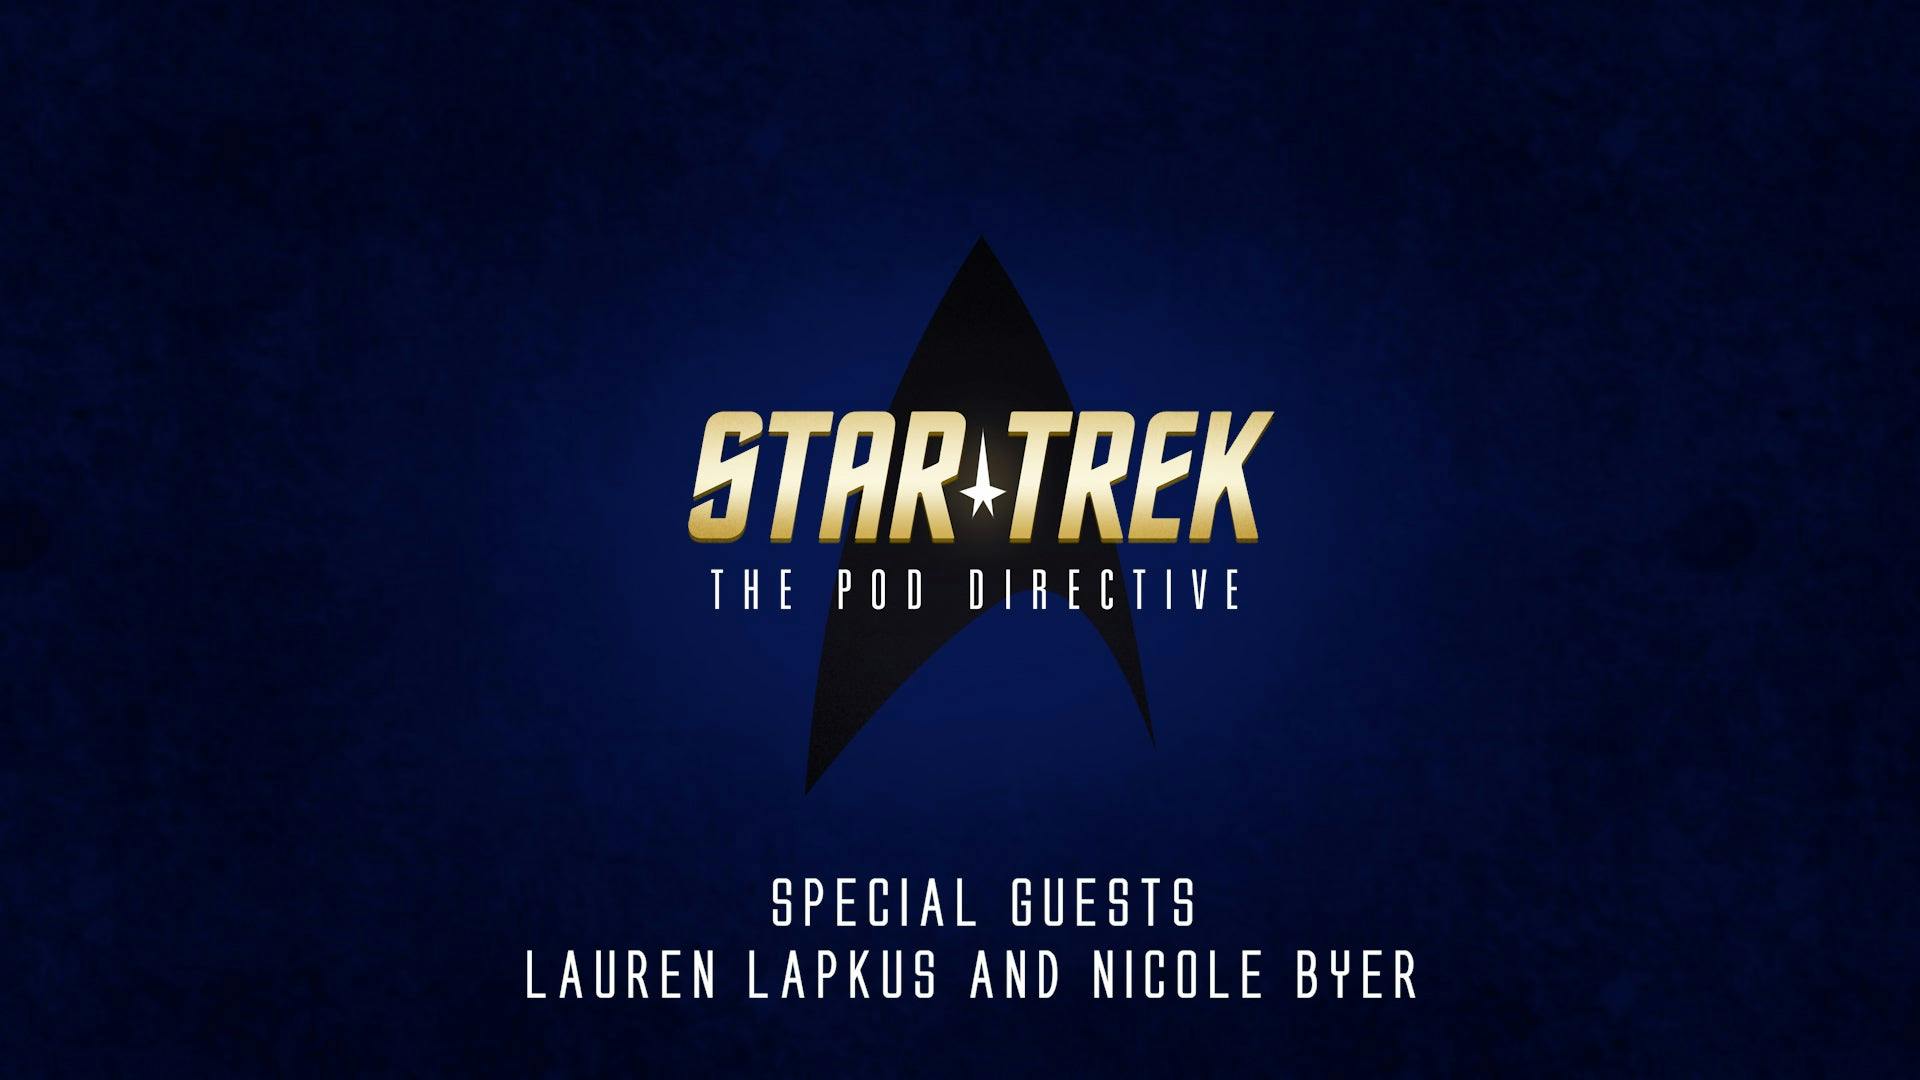 Star Trek: The Pod Directive with Lauren Lapkus and Nicole Byer